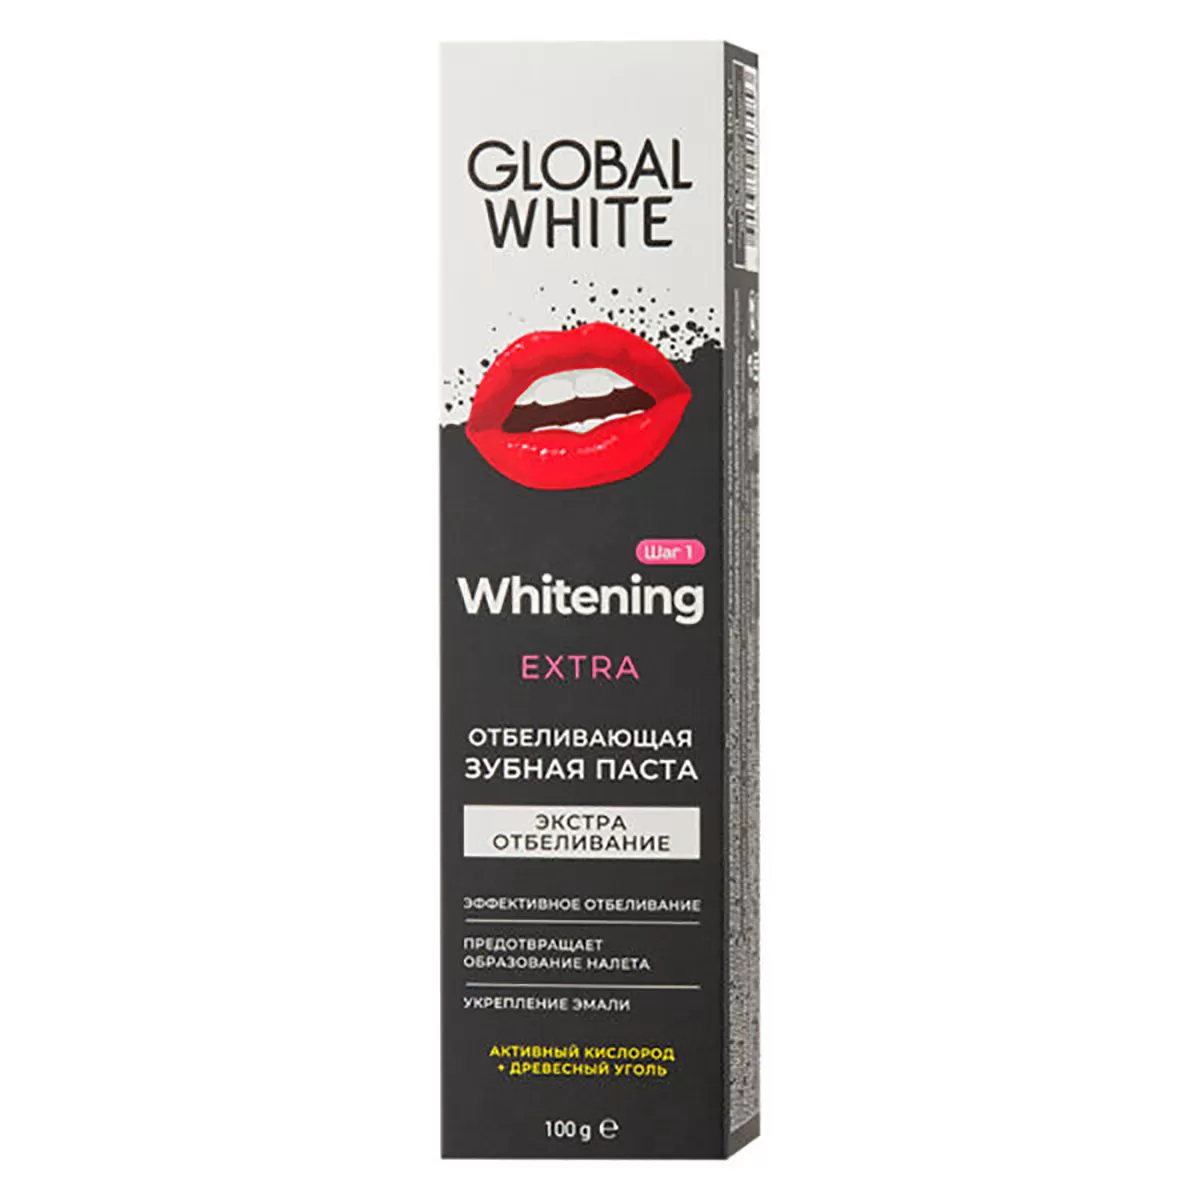 Global white whitening extra pasta za zube 100g 